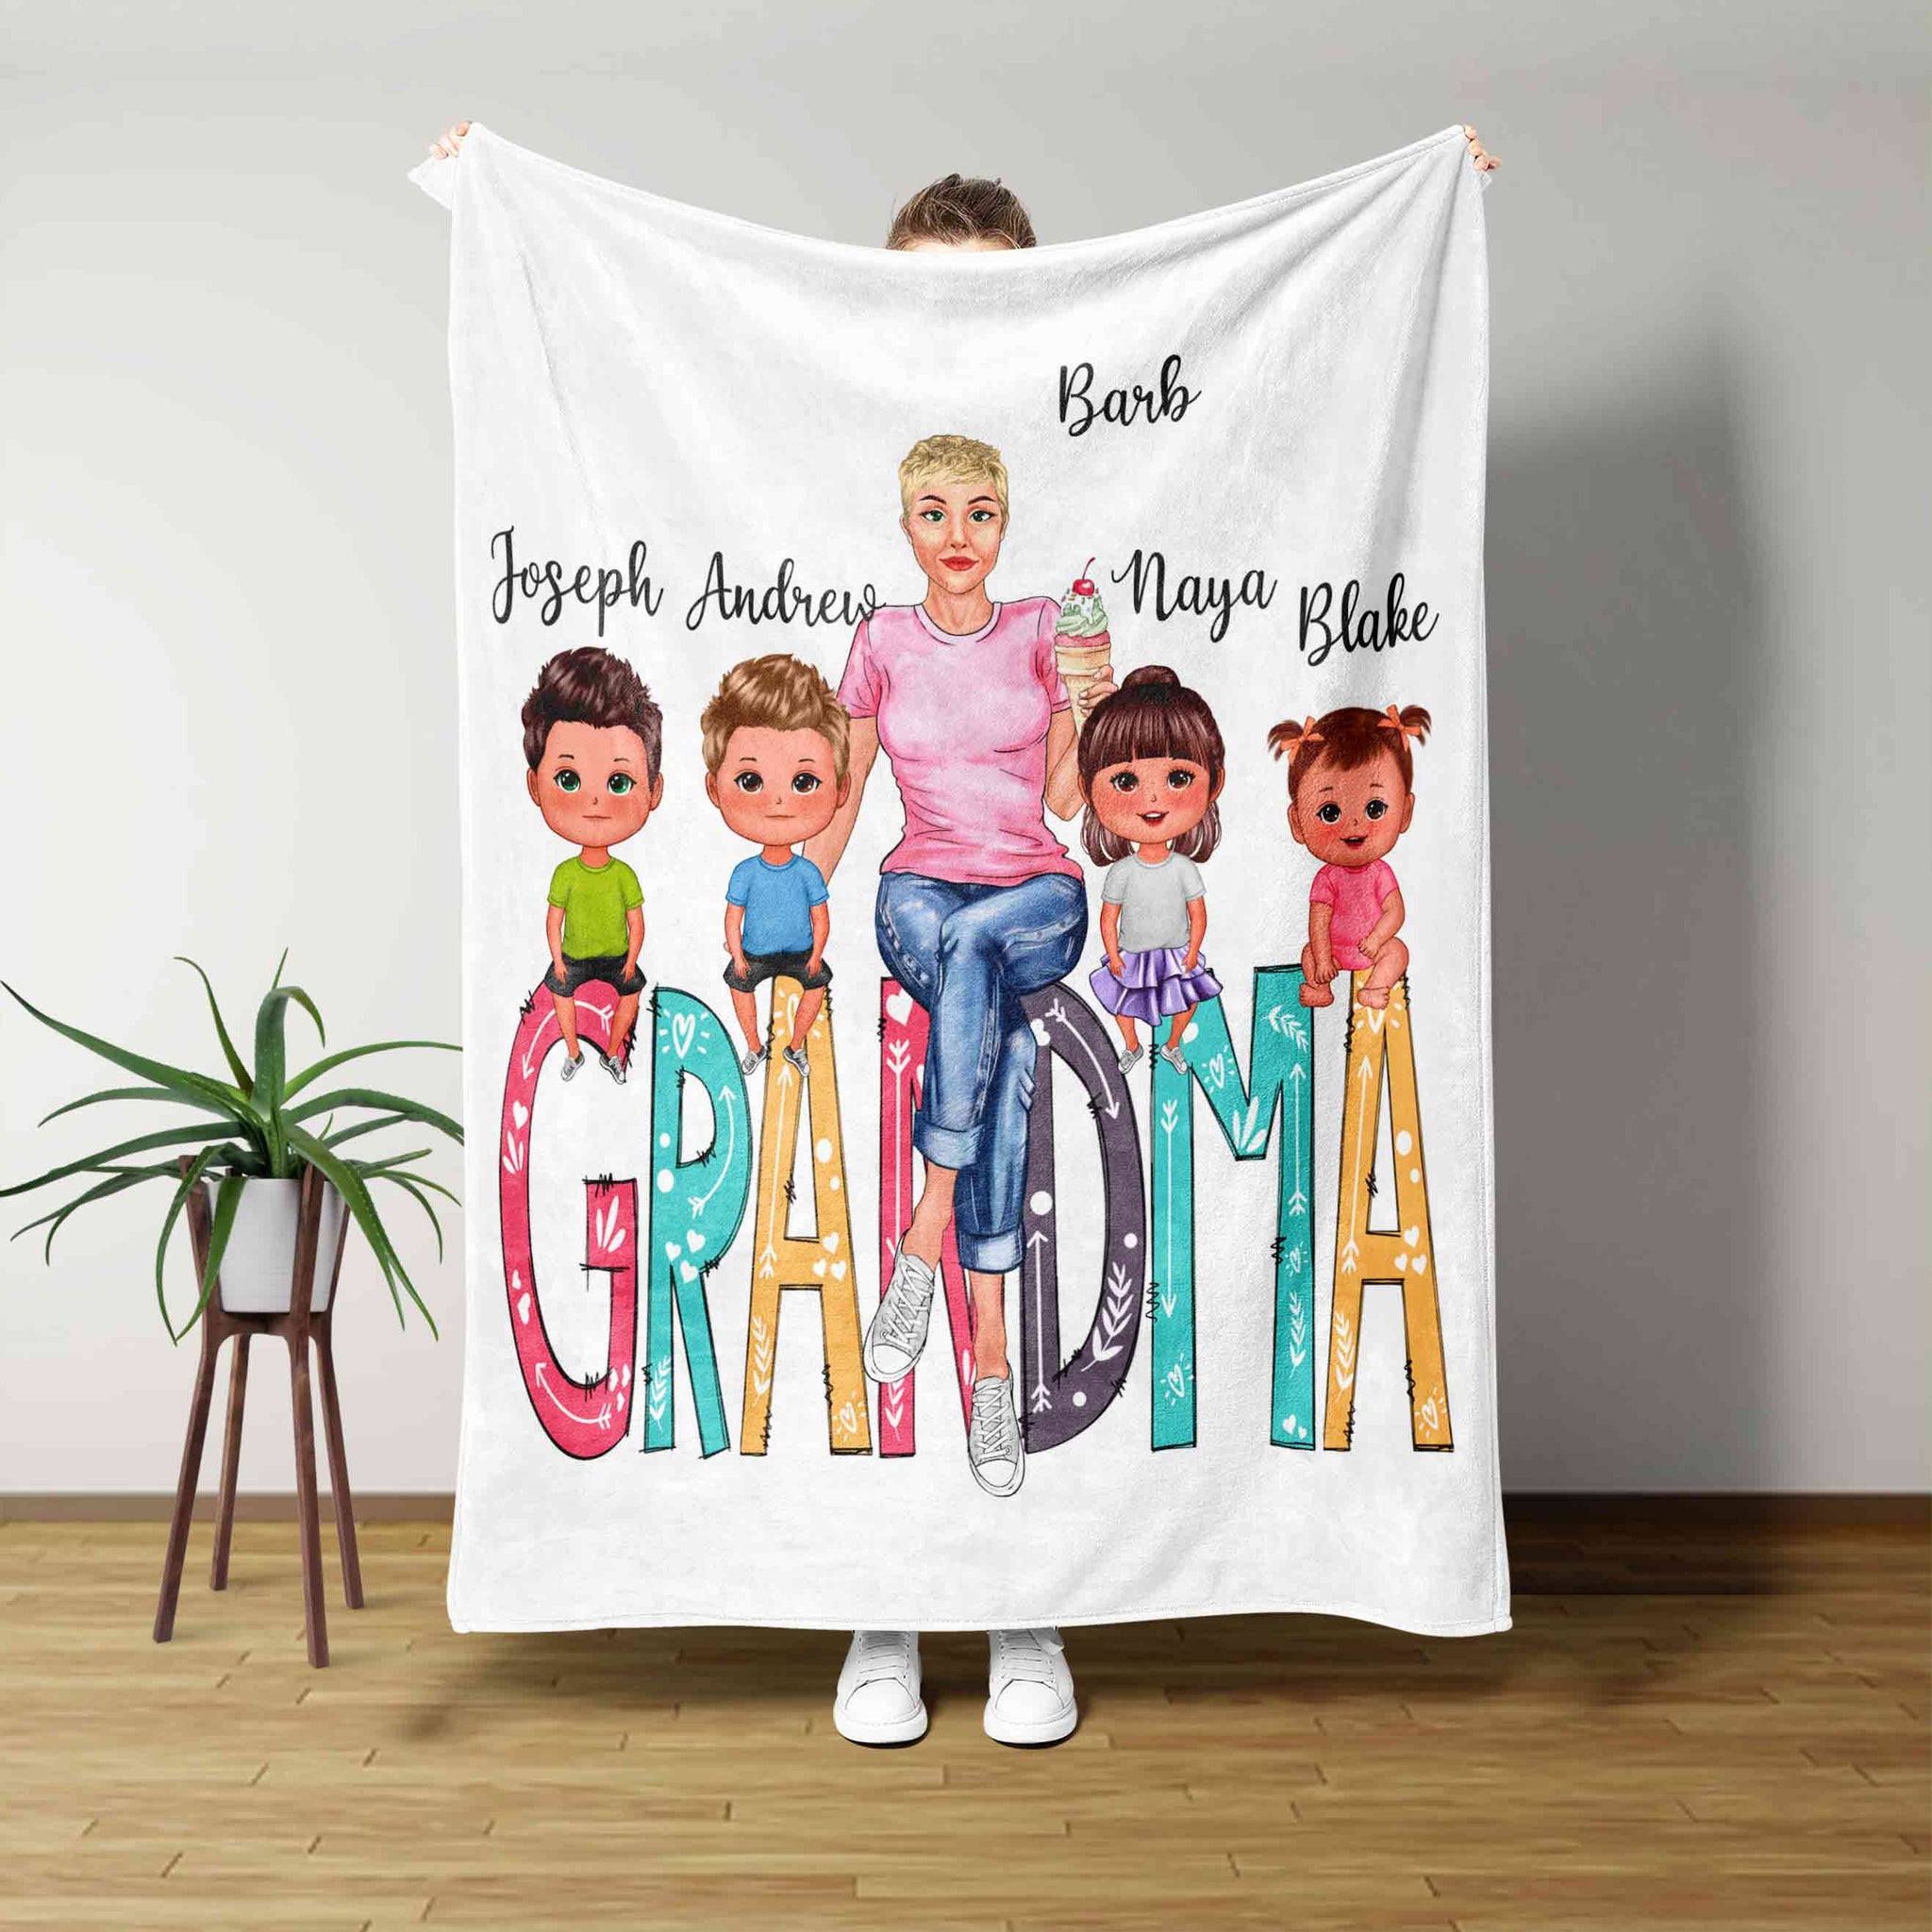 Personalized Name Blanket, Grandma Blanket, Grandkids Blanket, Kids Blanket, Family Blanket, Gift Blanket